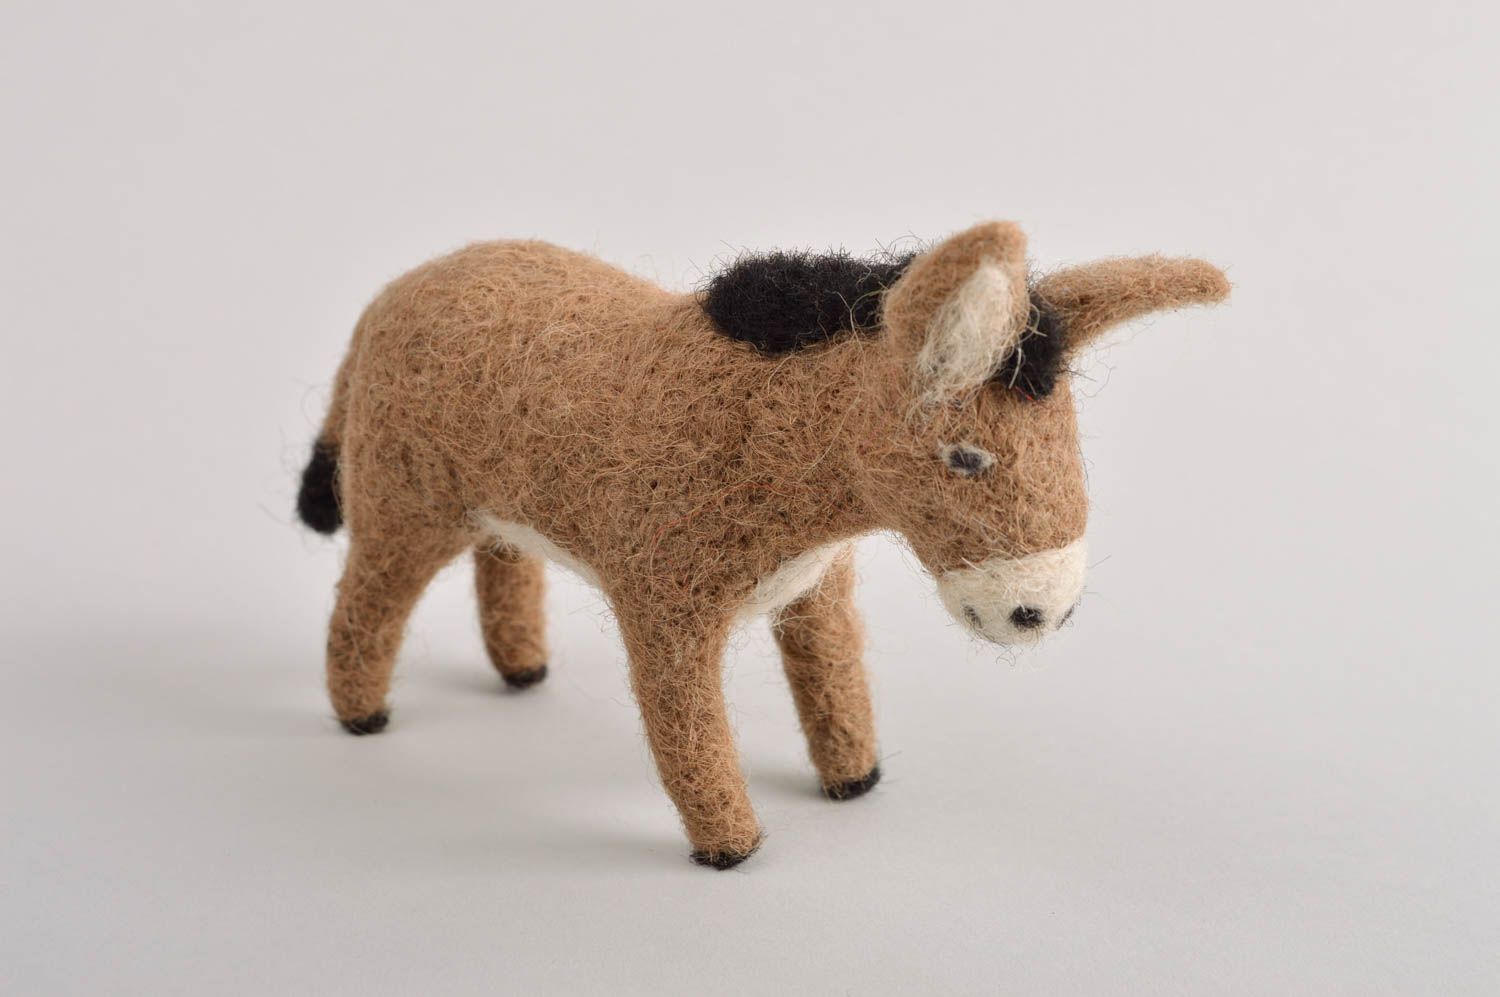 Handmade toy unusual toy woolen toy for kids interior decor ideas gift ideas photo 2